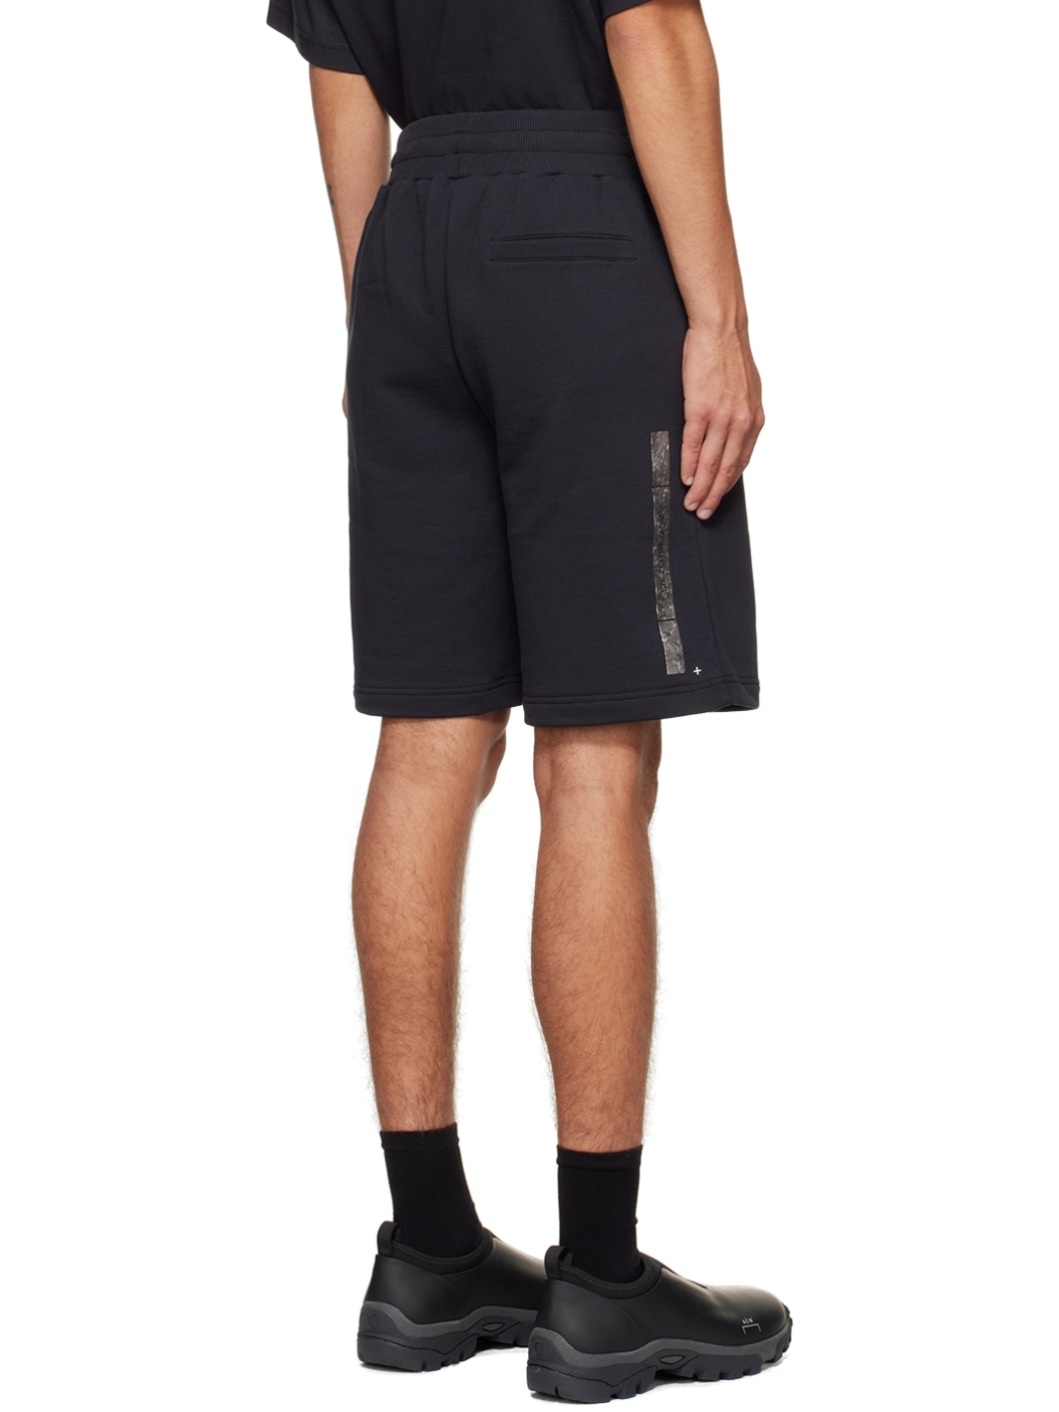 Black Foil Grid Shorts - 3